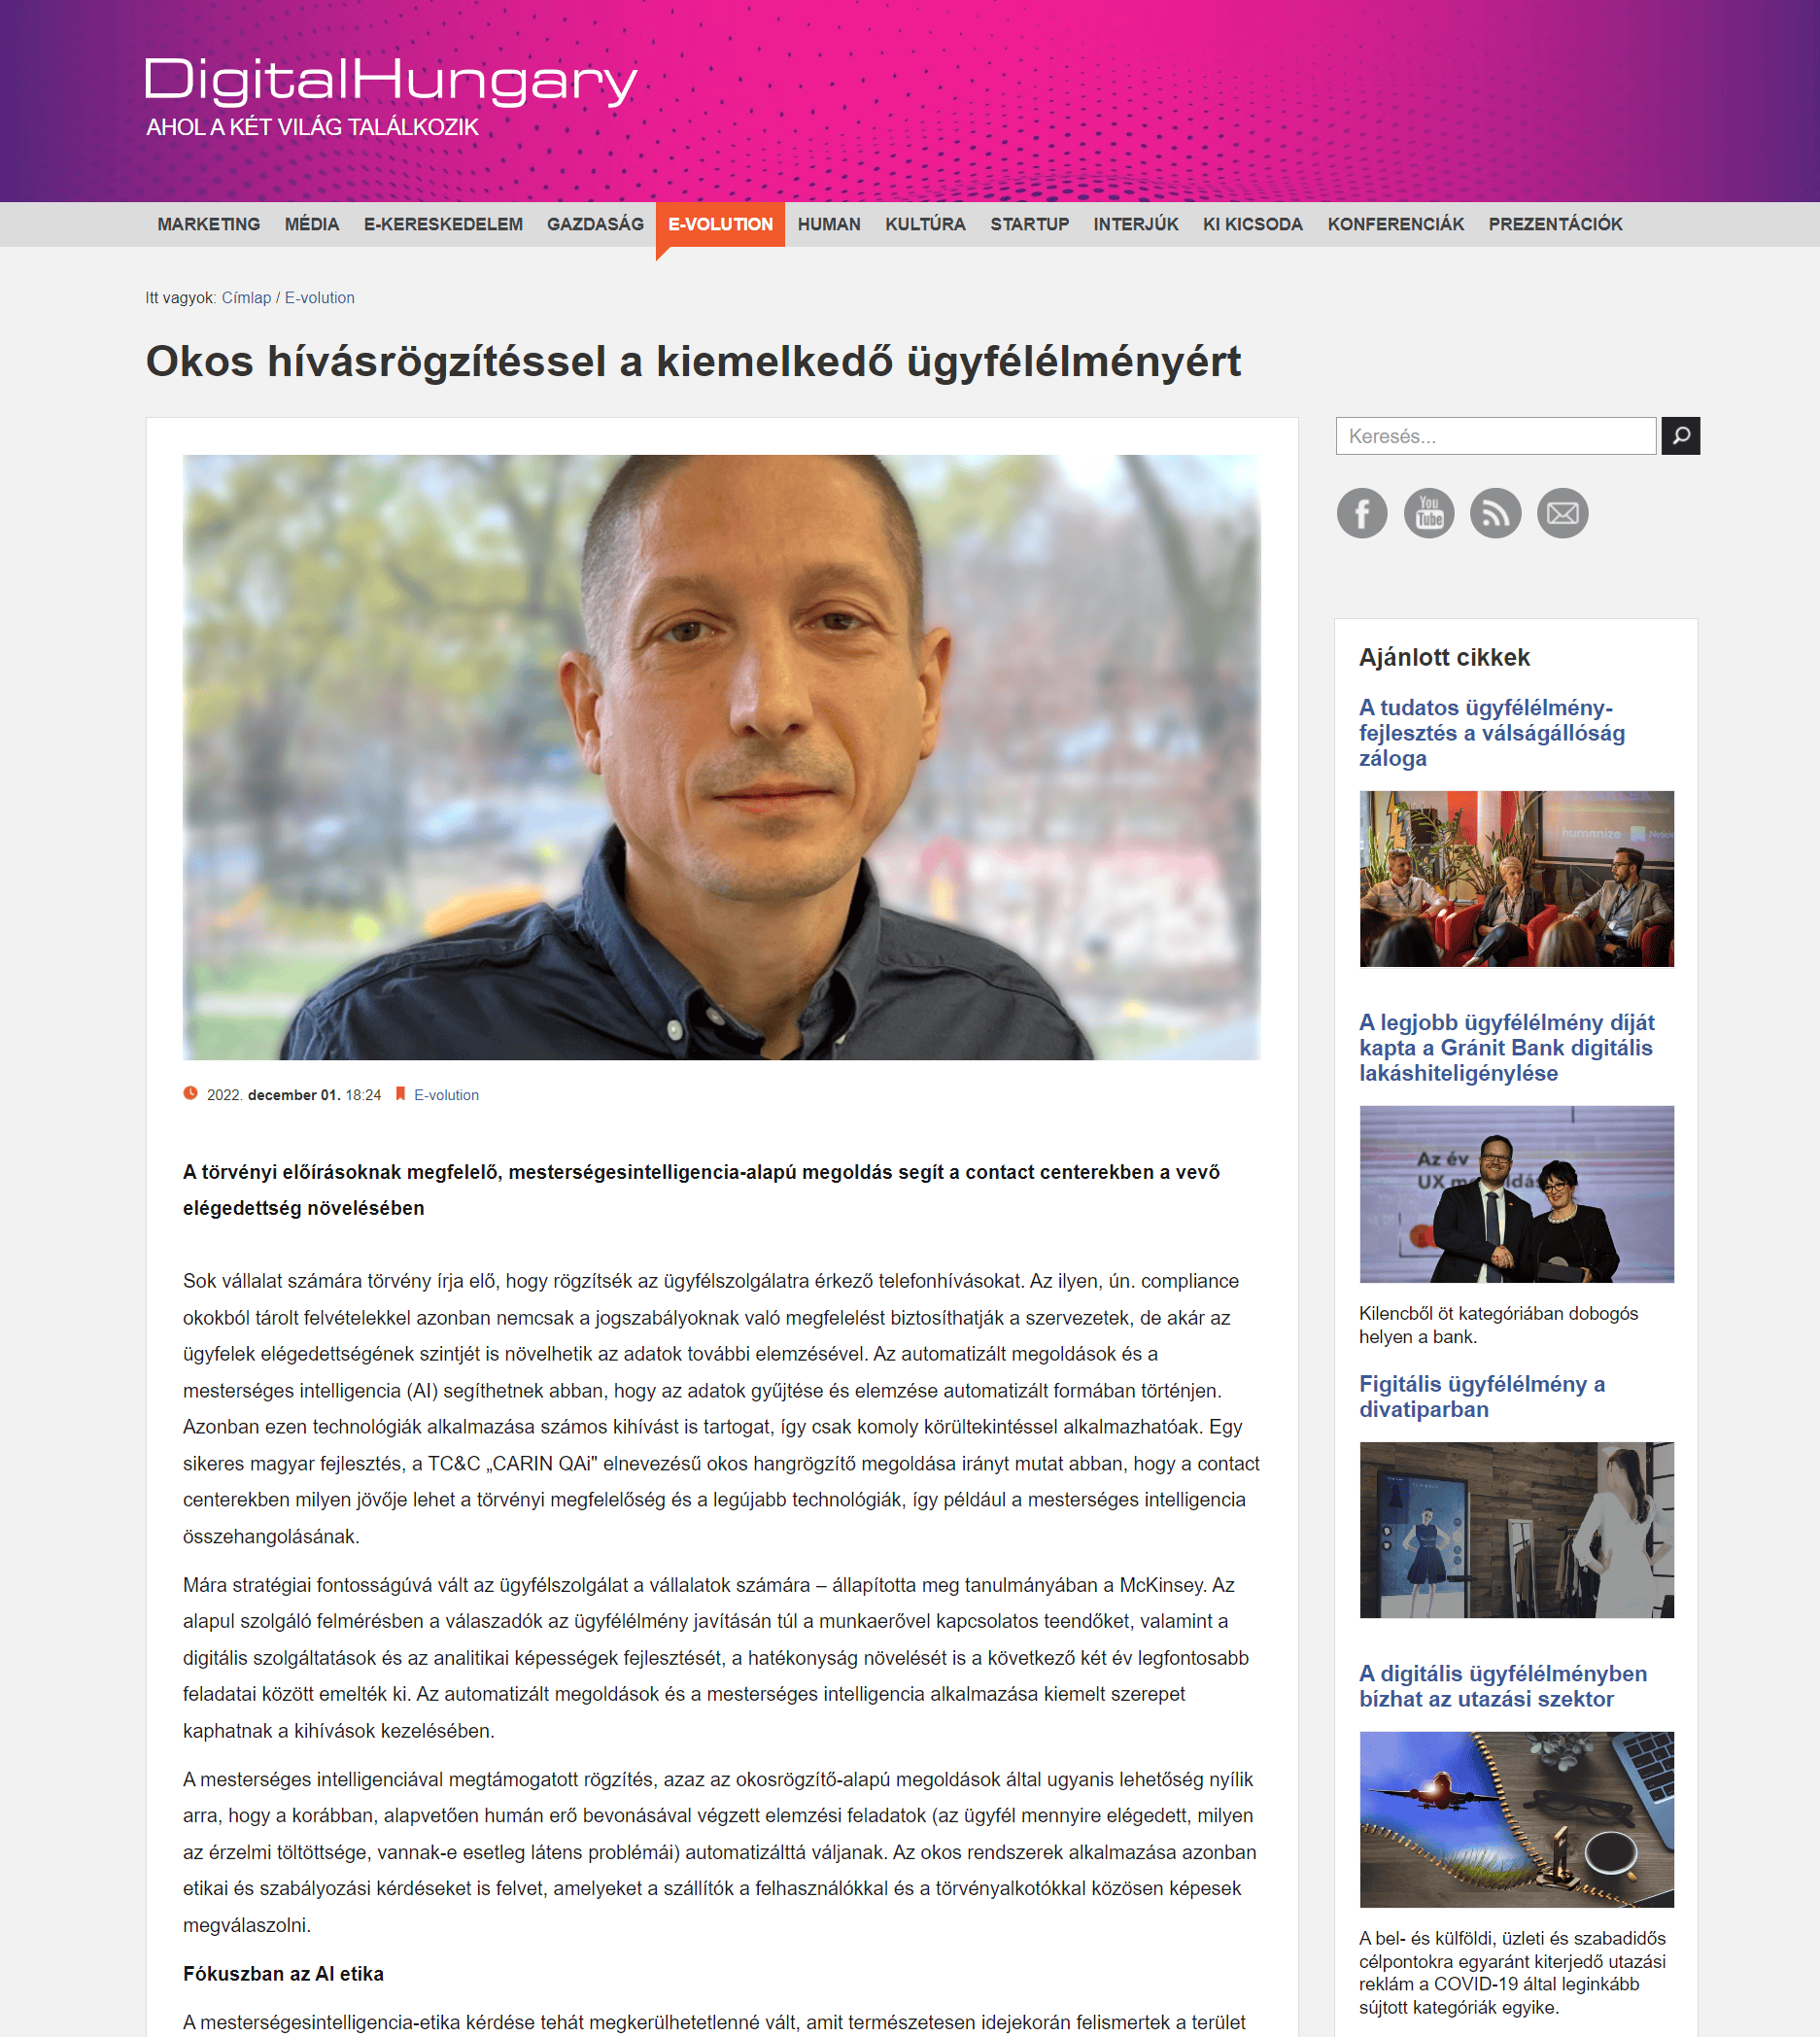 Digital Hungary article